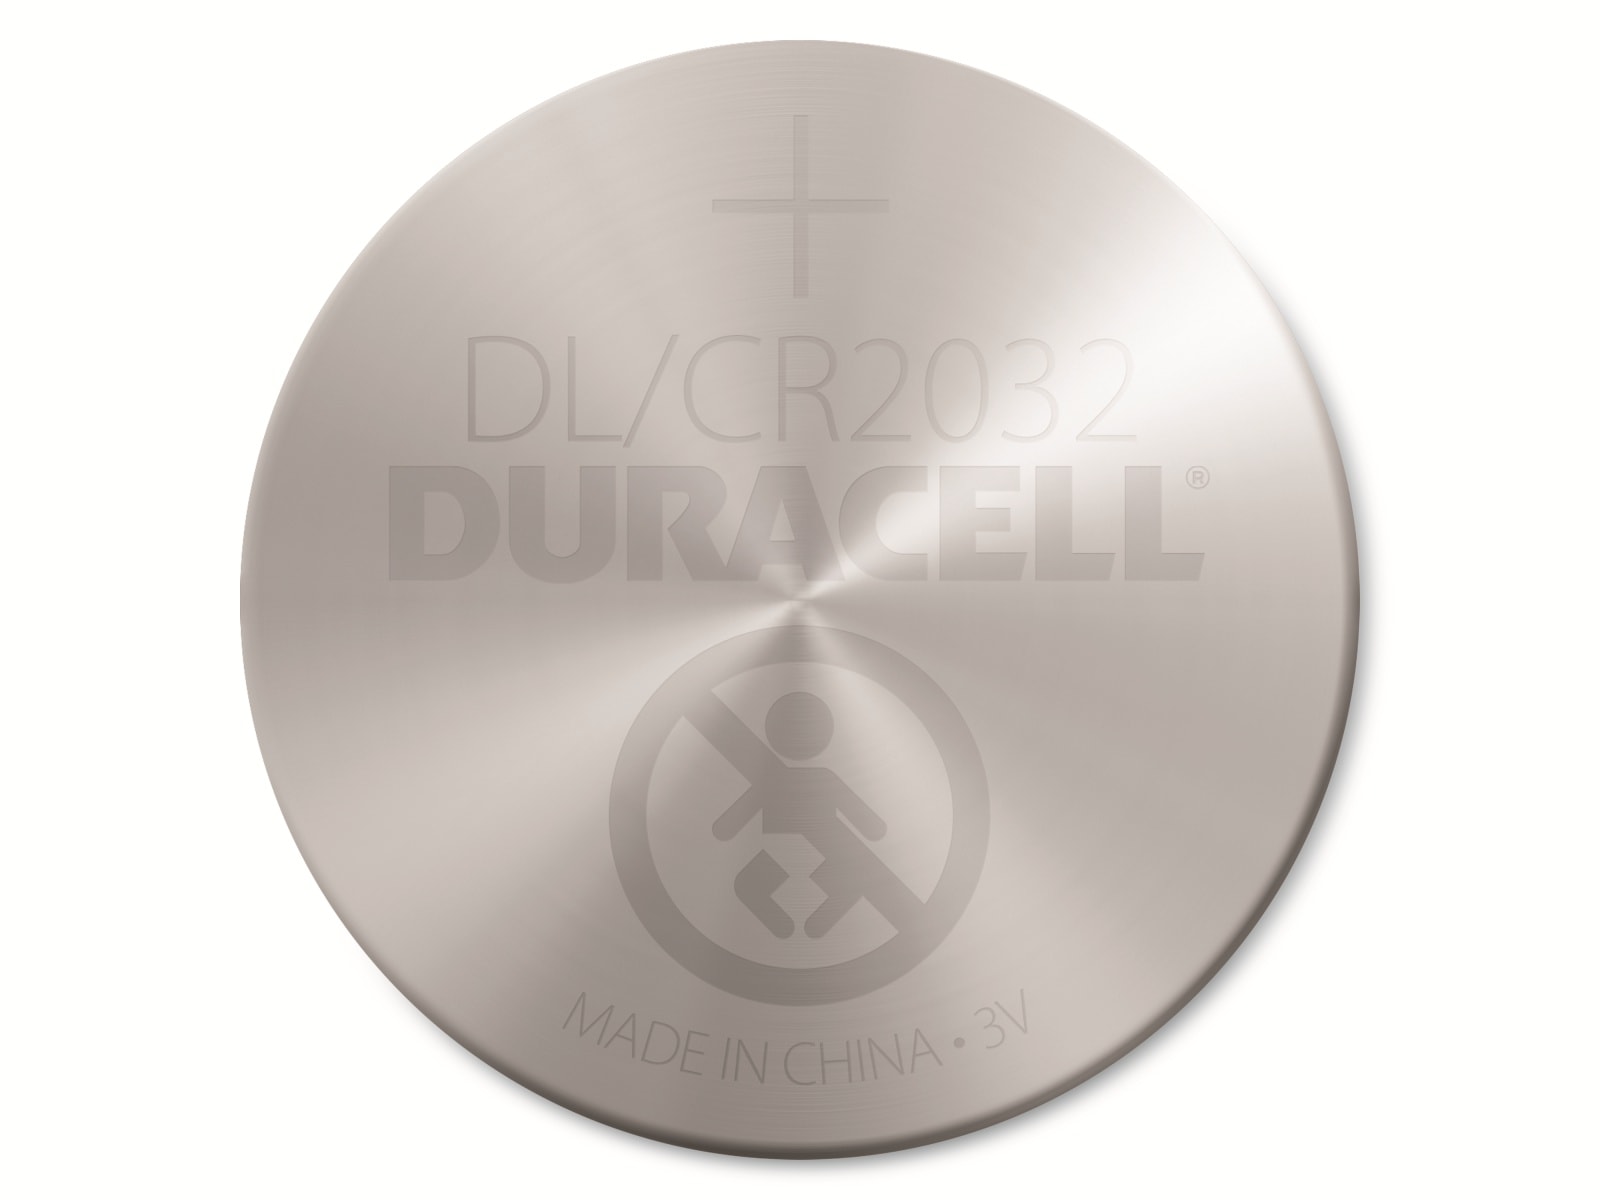 DURACELL Lithium-Knopfzelle CR2032, 3V, Electronics, 2 Stück